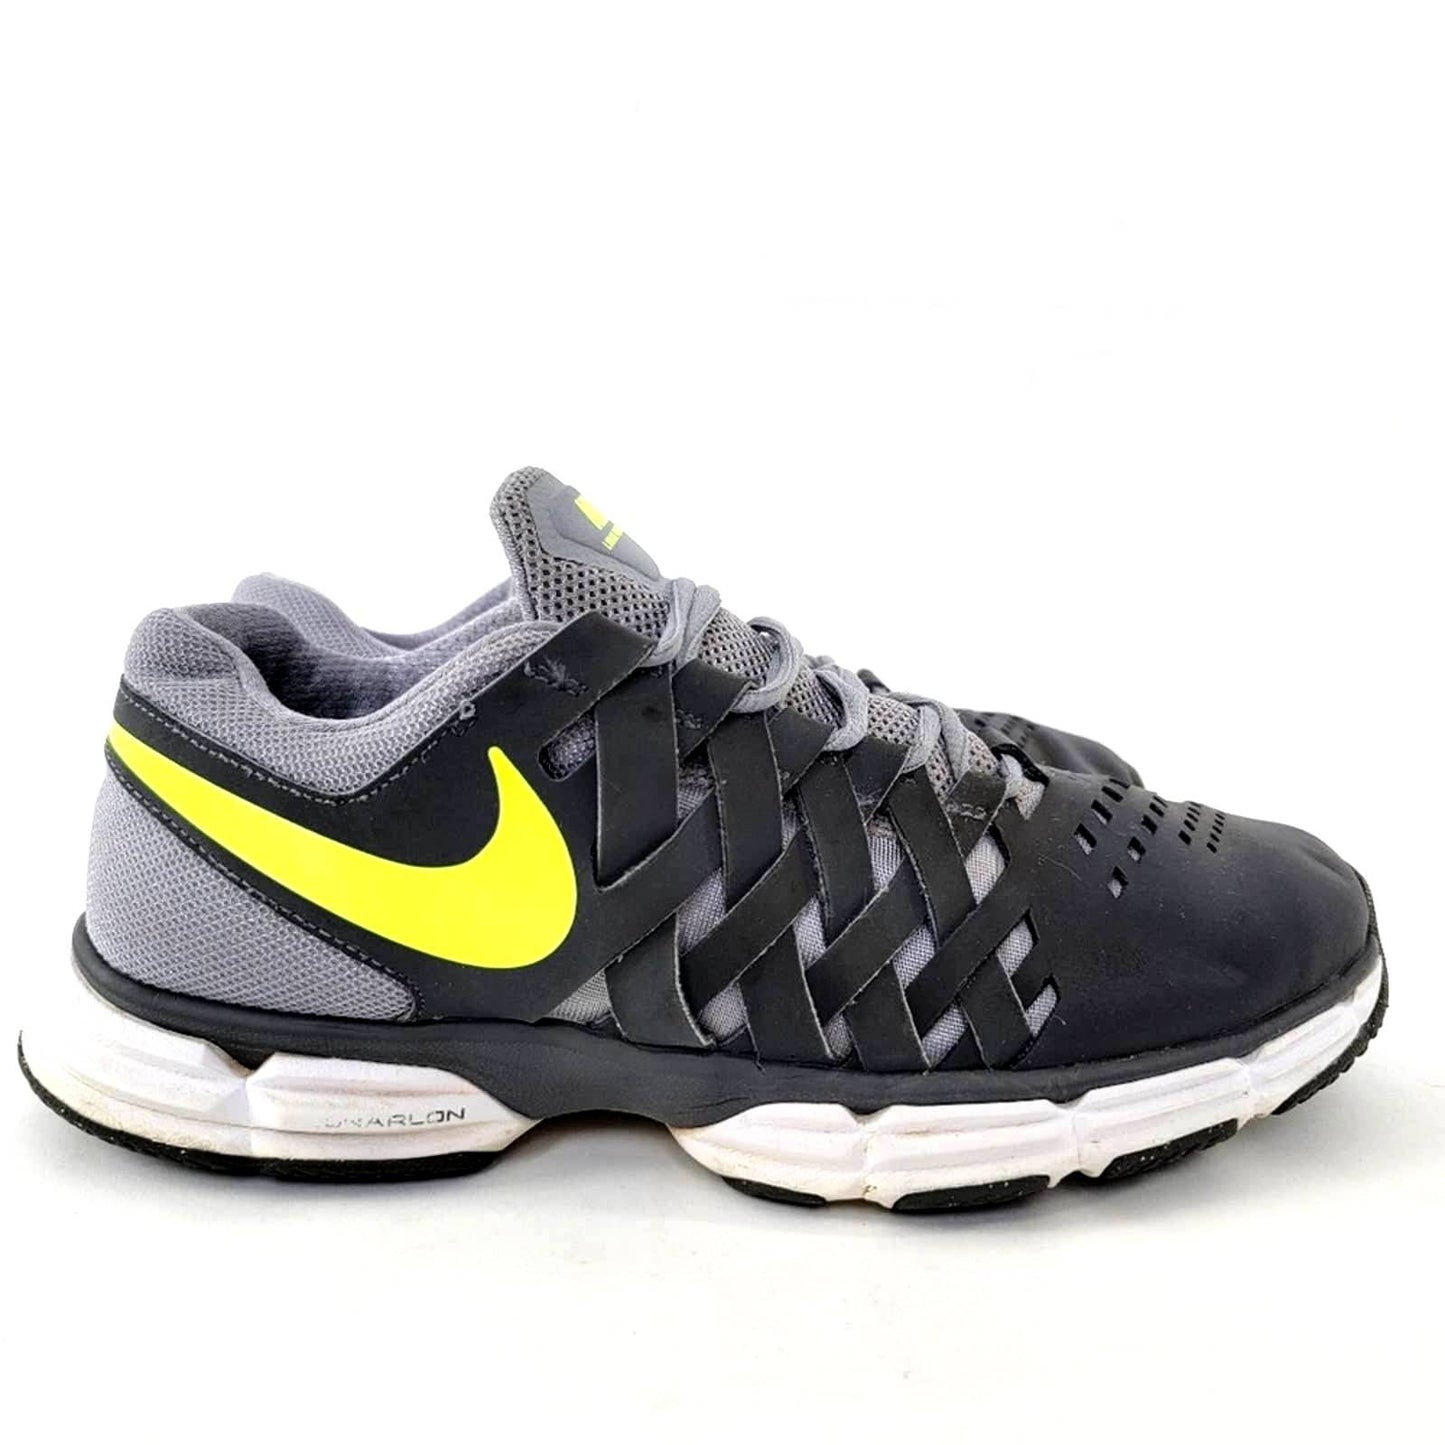 Nike Lunar Fingertrap TR Running Shoes - 8.5/10